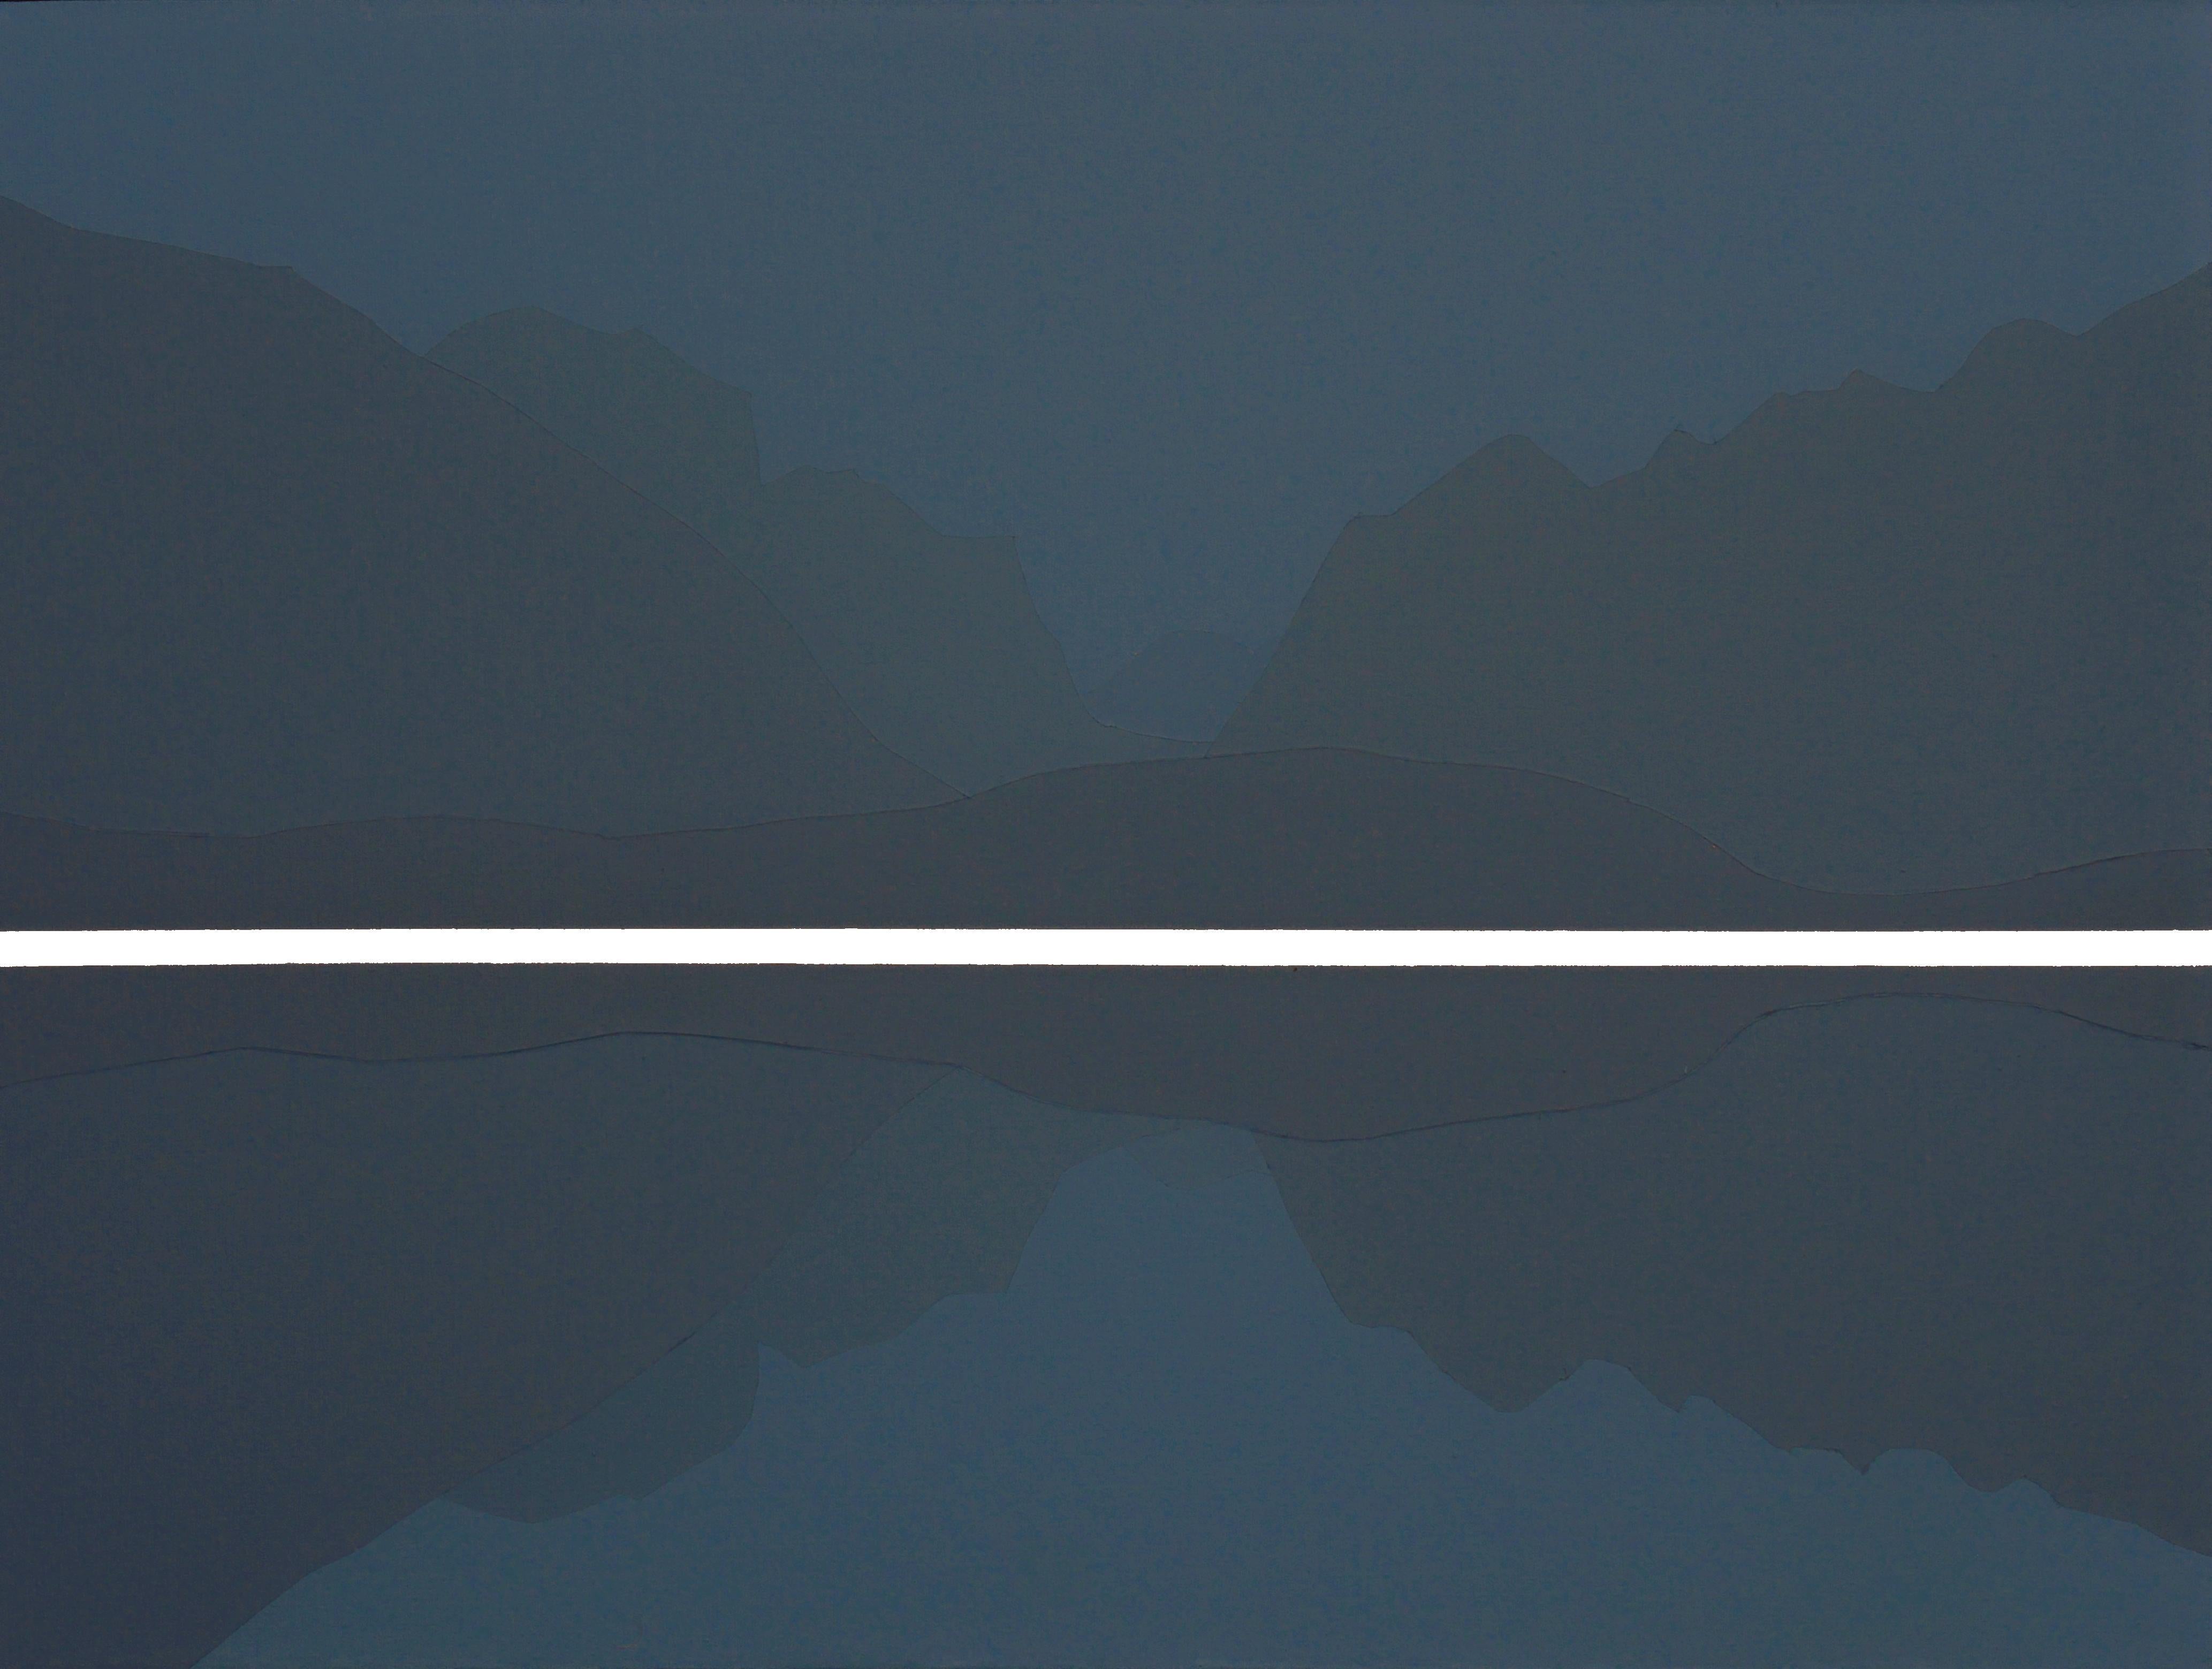 Robert Motelski Figurative Painting - Mountains 06 December 15:05 - Contemporary Landscape Painting, Minimalistic 